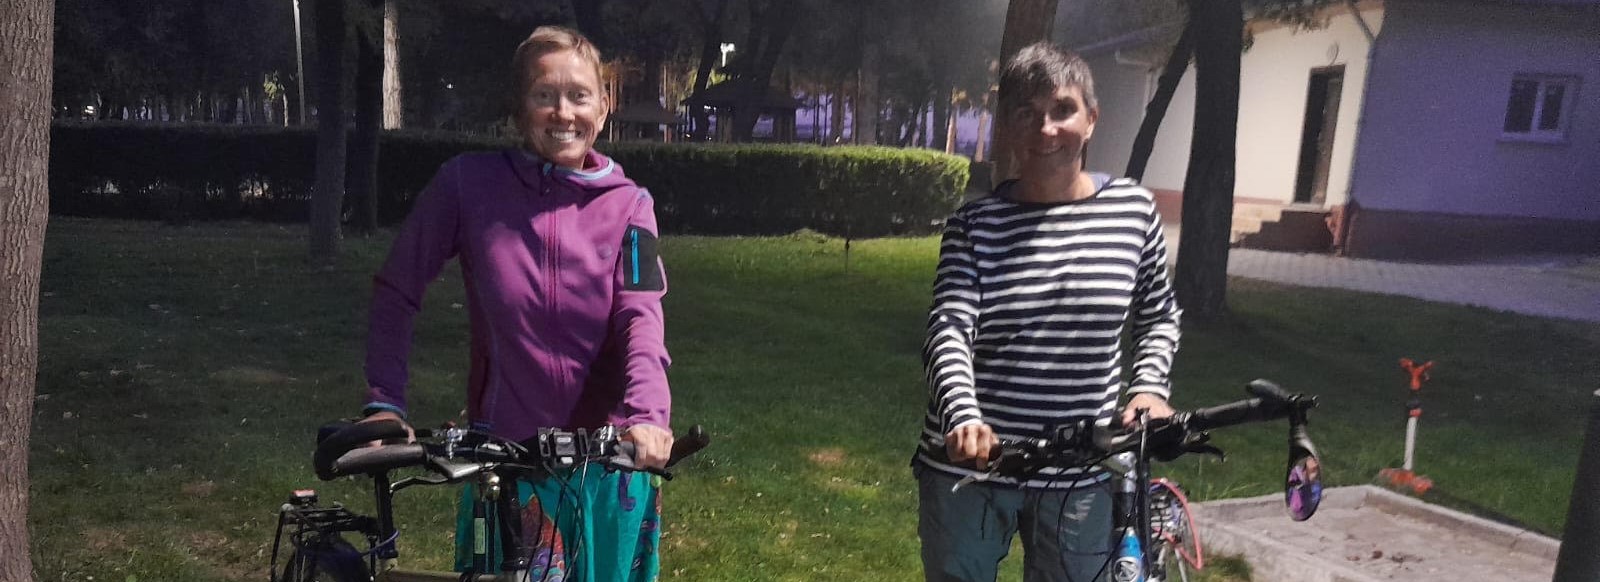 İspanyol bisikletliler, Karapınar'da mola verdi